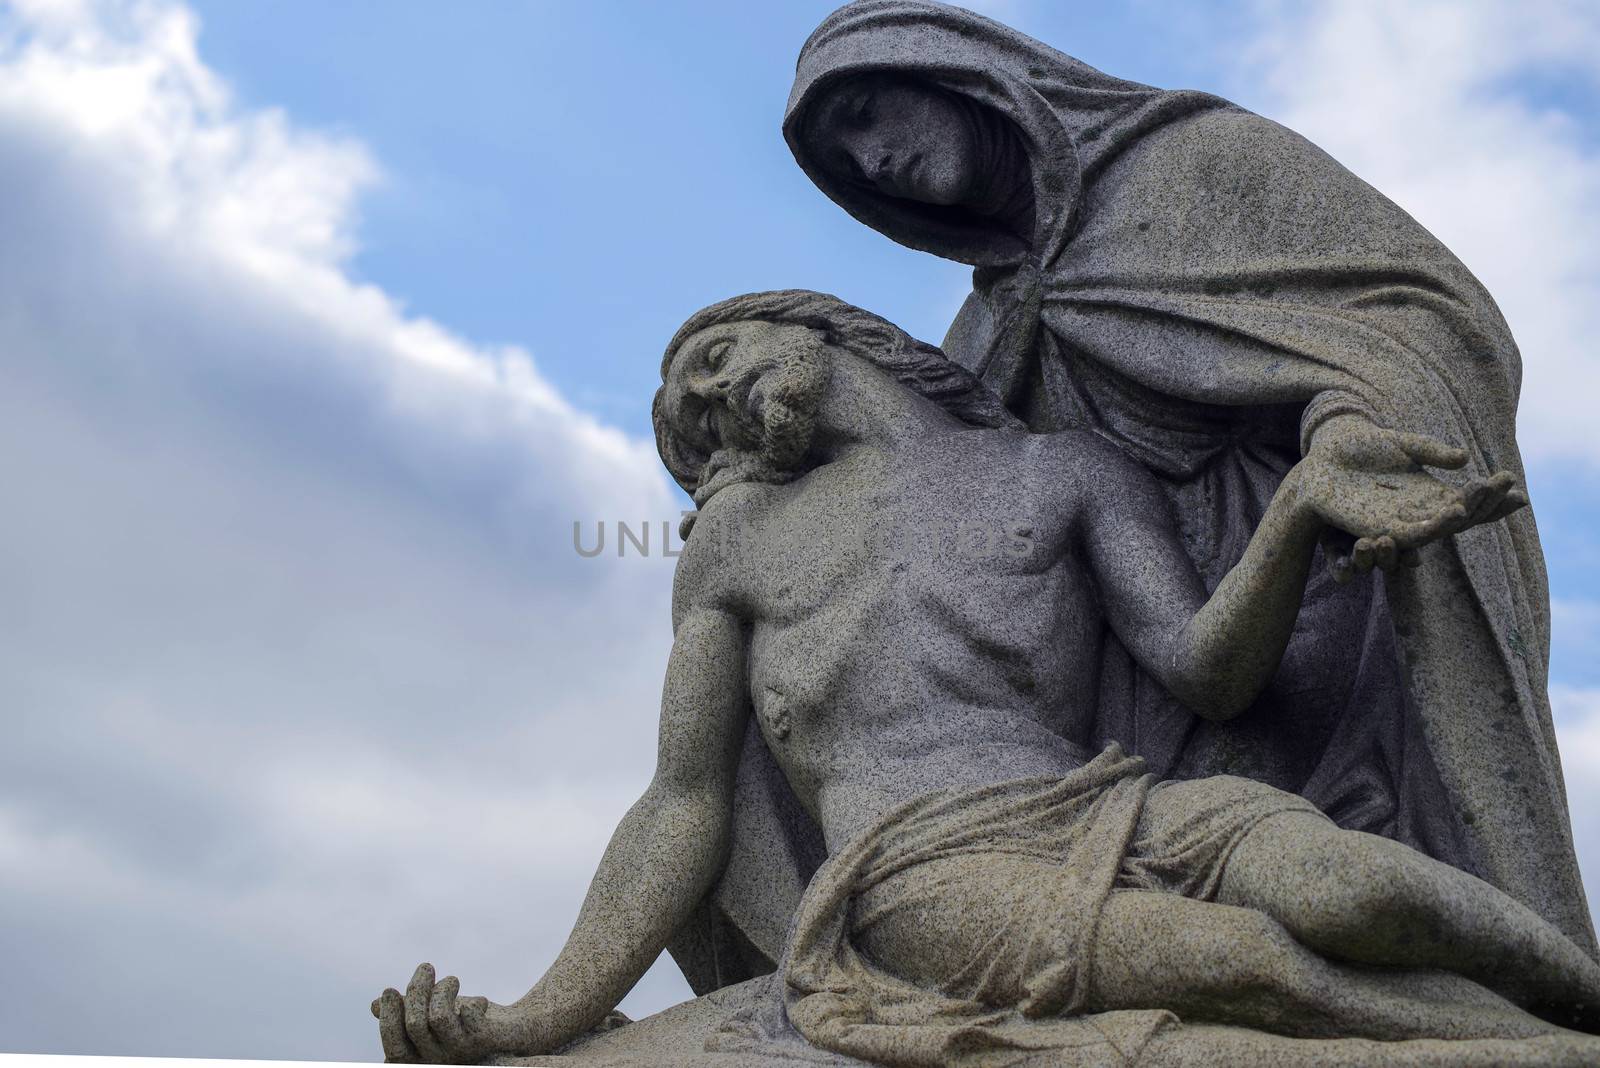 Cemetery statue, Jesus and Mary pieta against a blue sky by marysalen